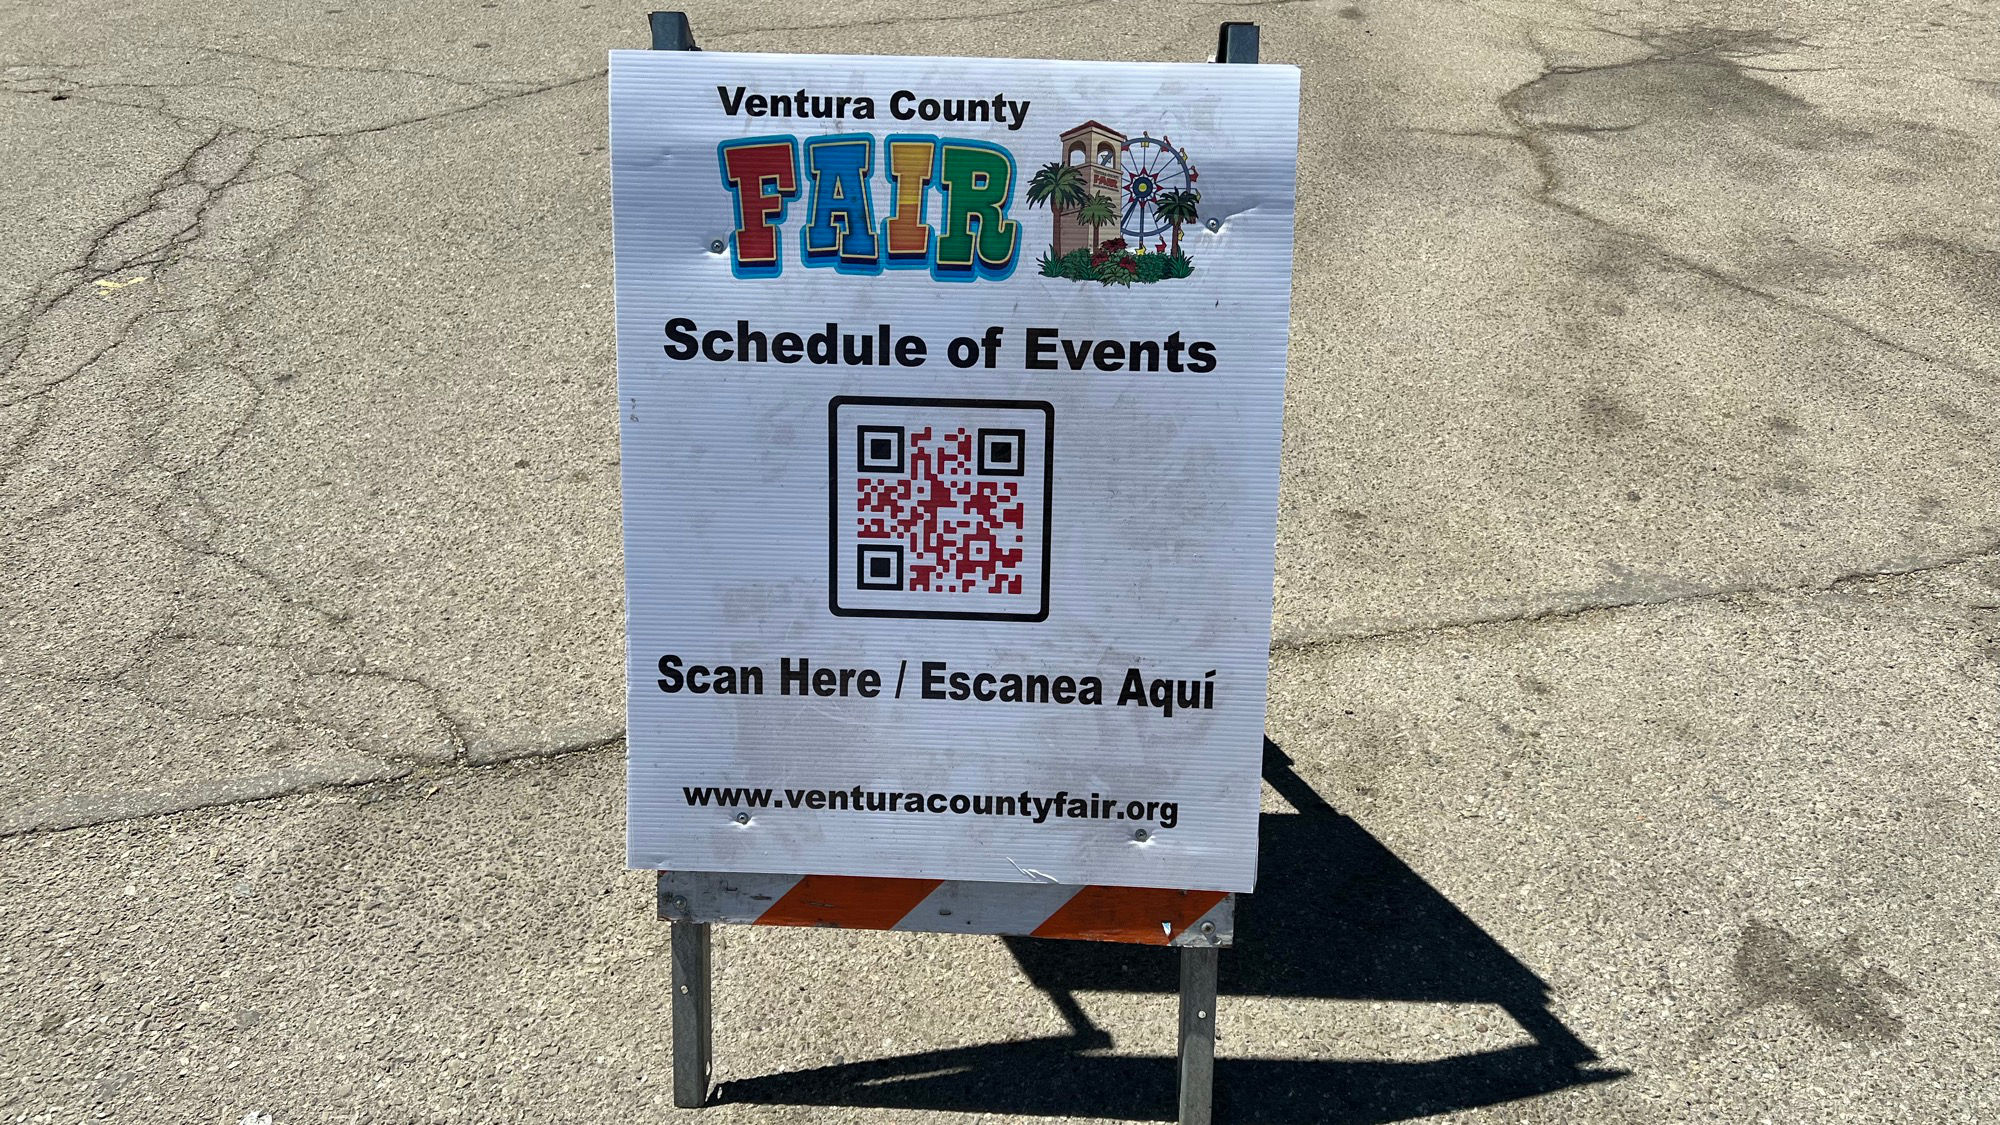 Ventura County Fair Schedule of Events